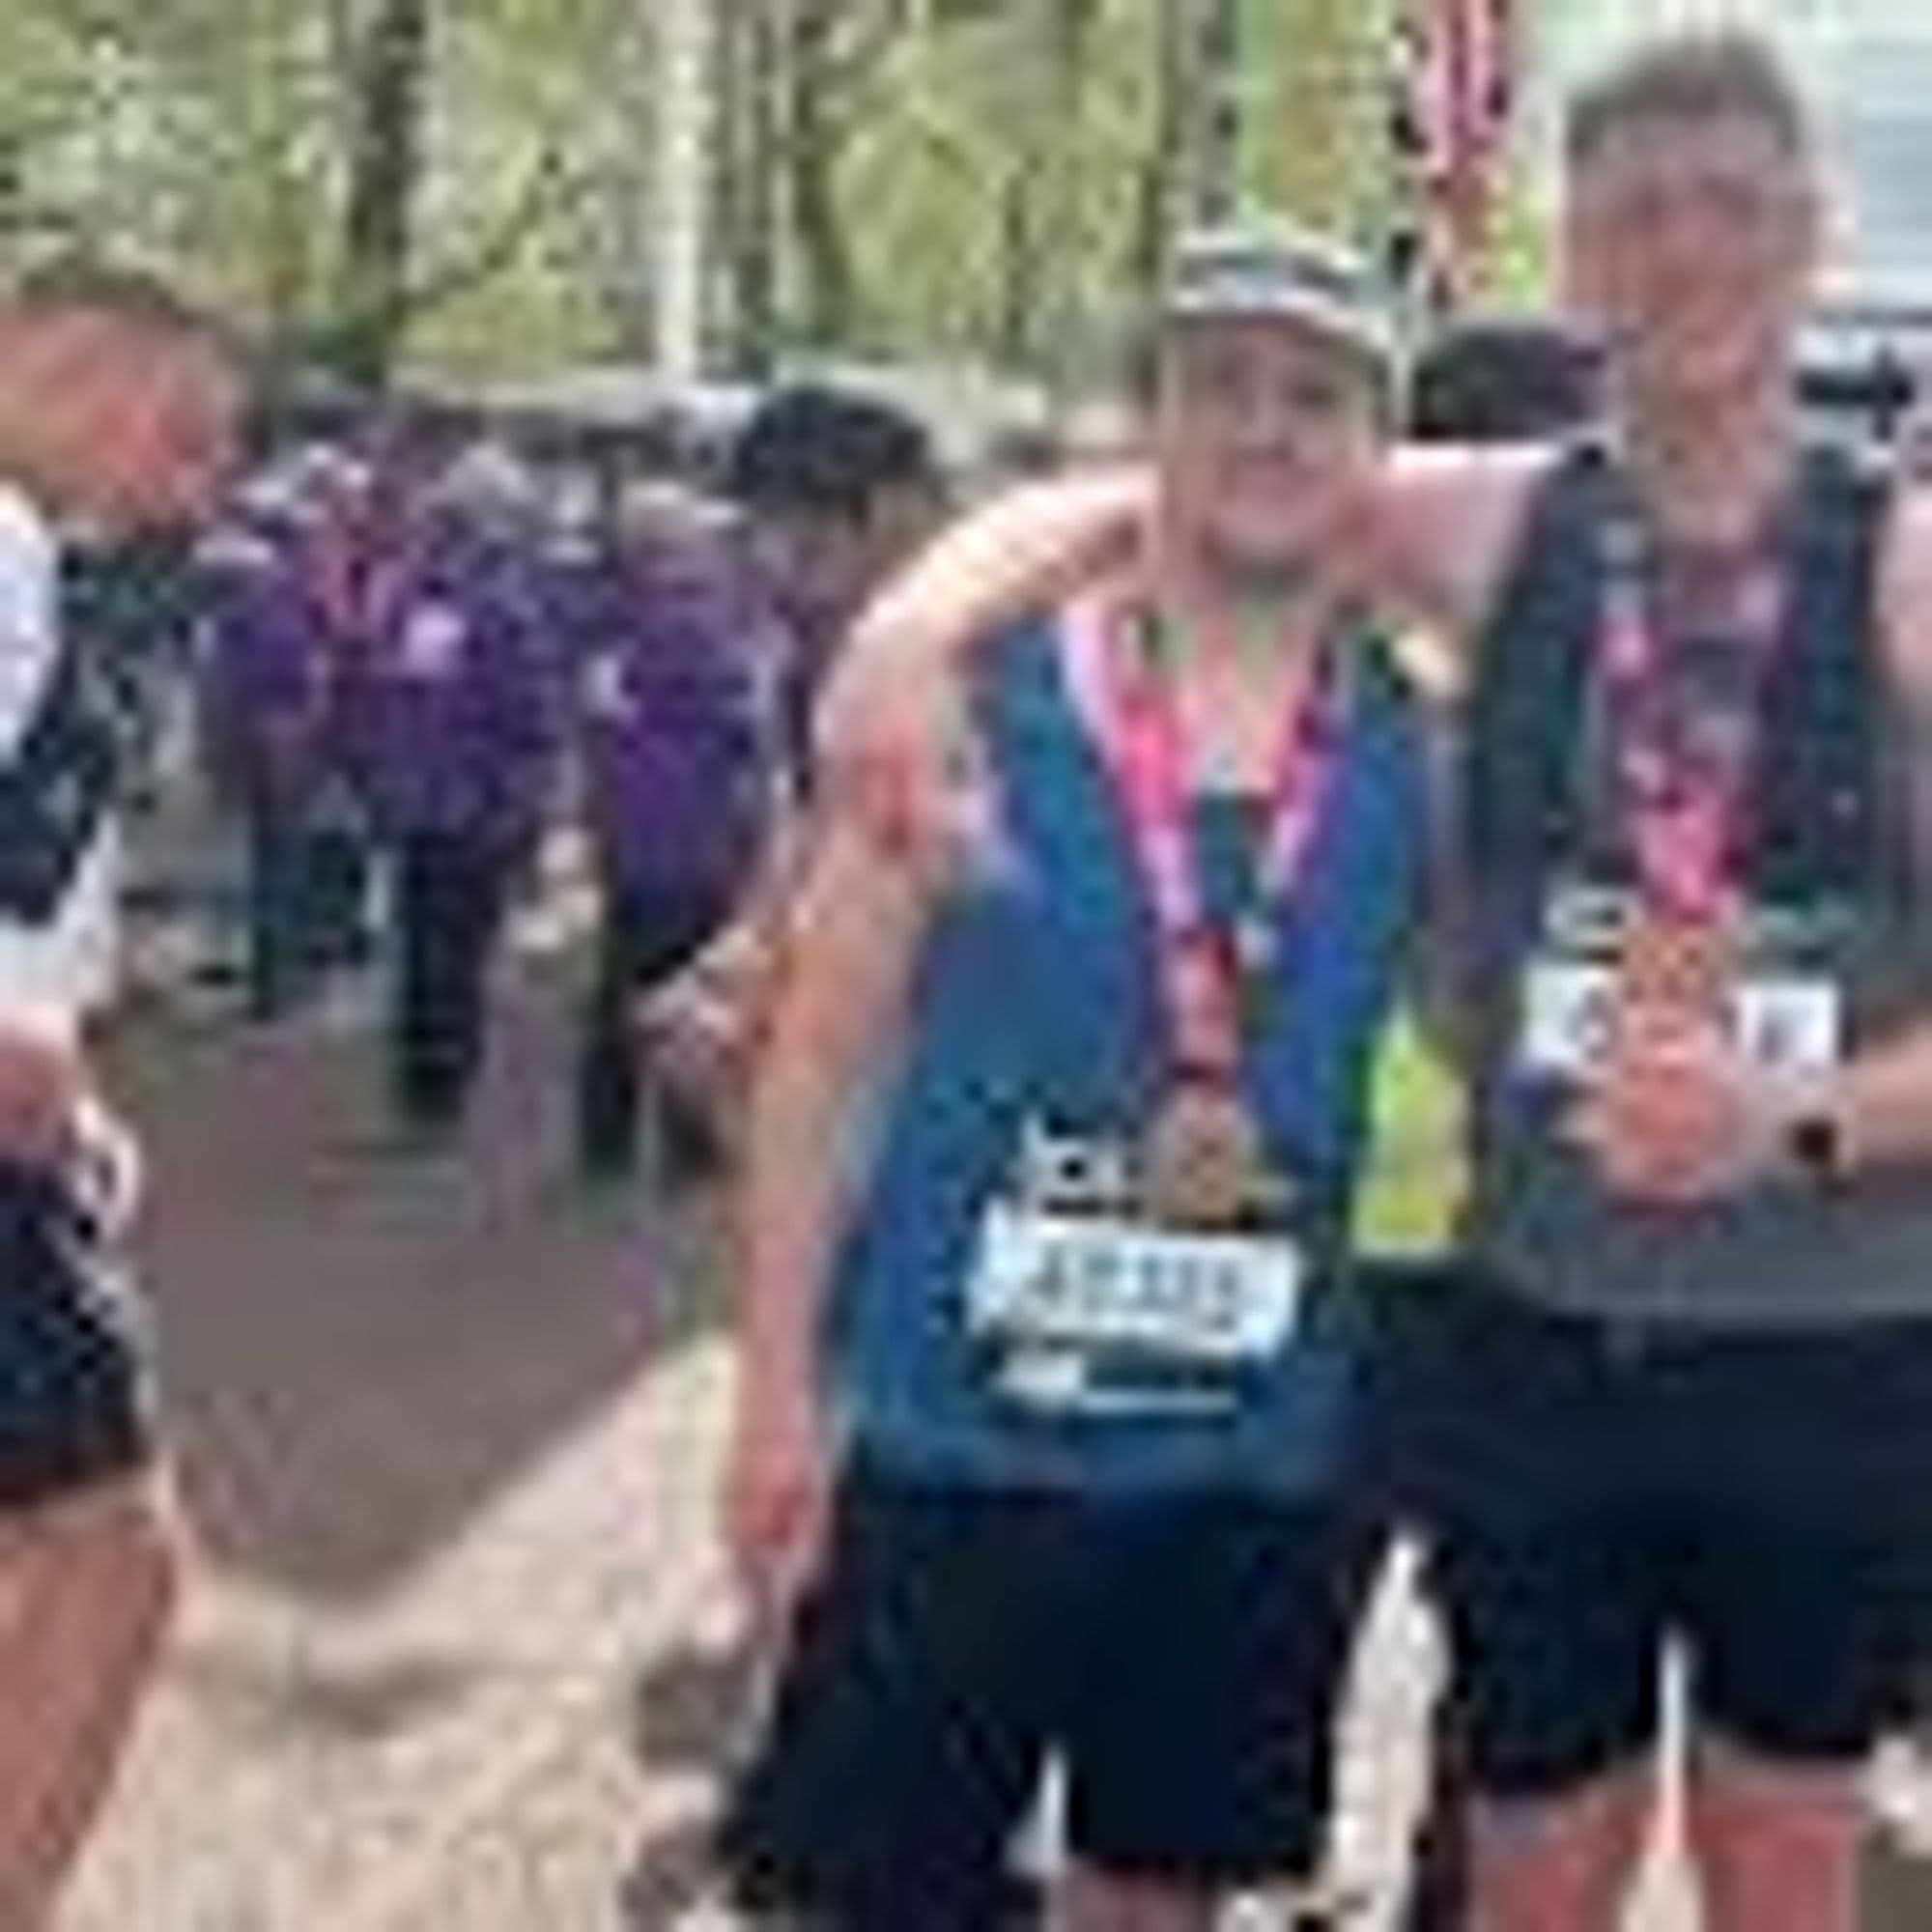 # The London Marathon: Tales of Triumph and Tribulation